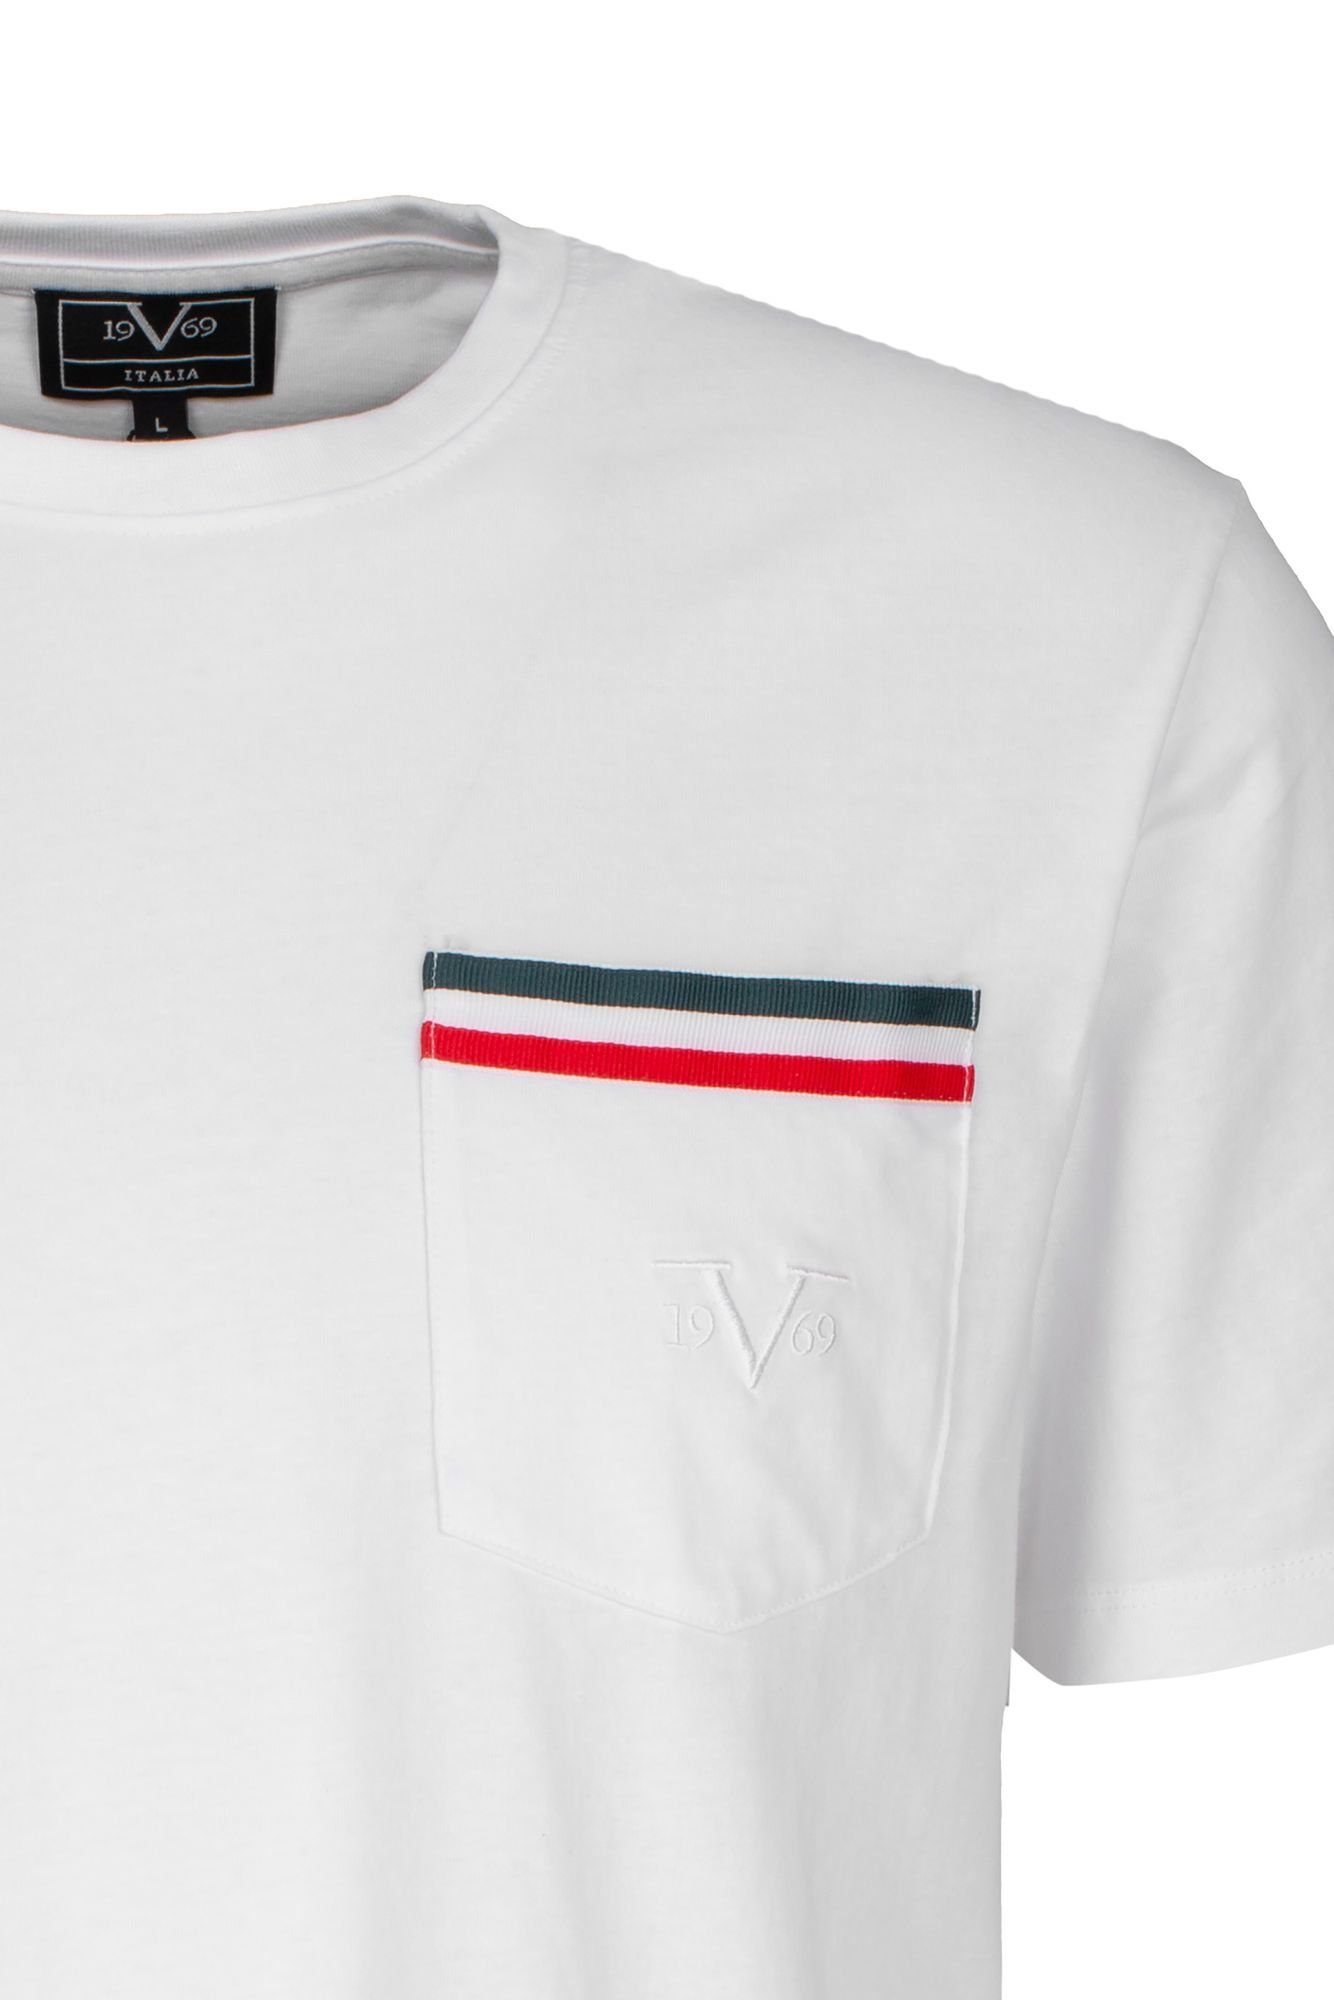 19V69 Italia by Versace T-Shirt Federico-031